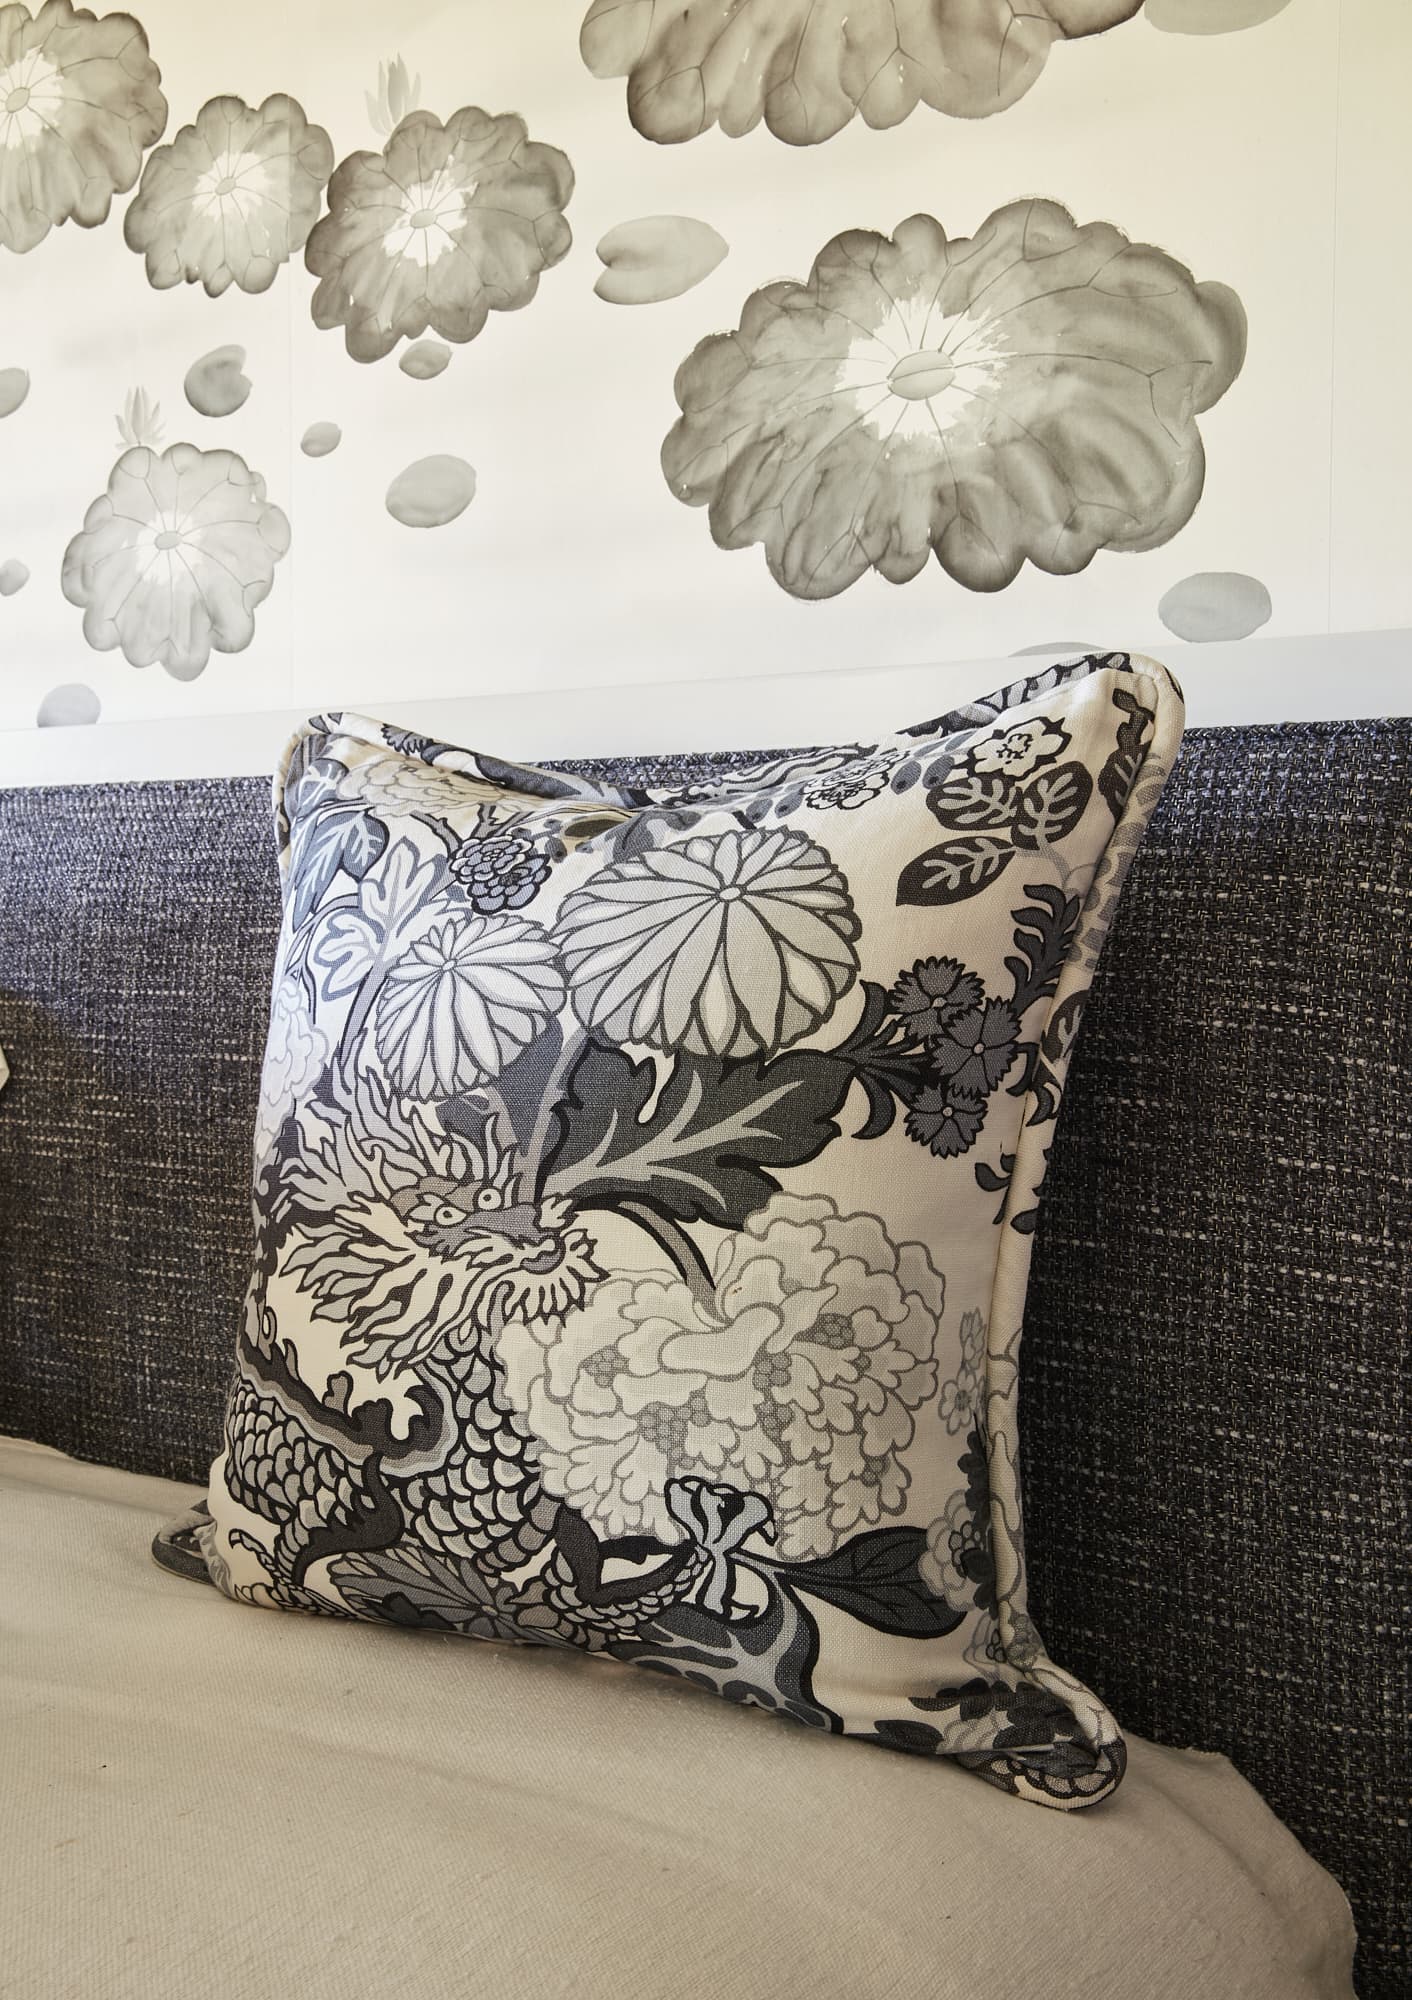 Gray and white dragon pillow designed by Denver interior decorator